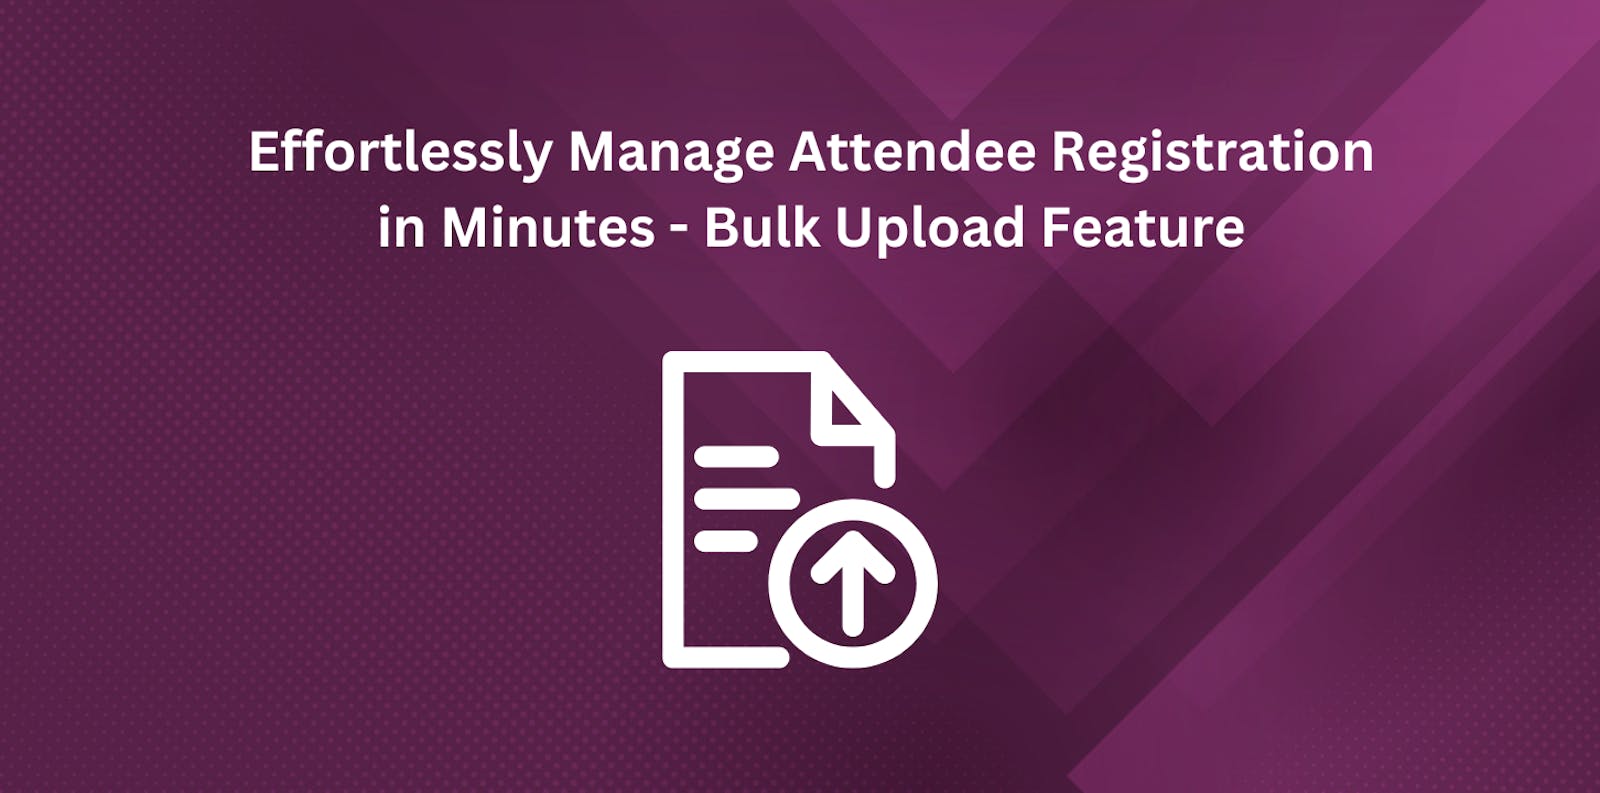 Effortlessly Manage Attendee Registration in Minutes - Bulk Upload Feature